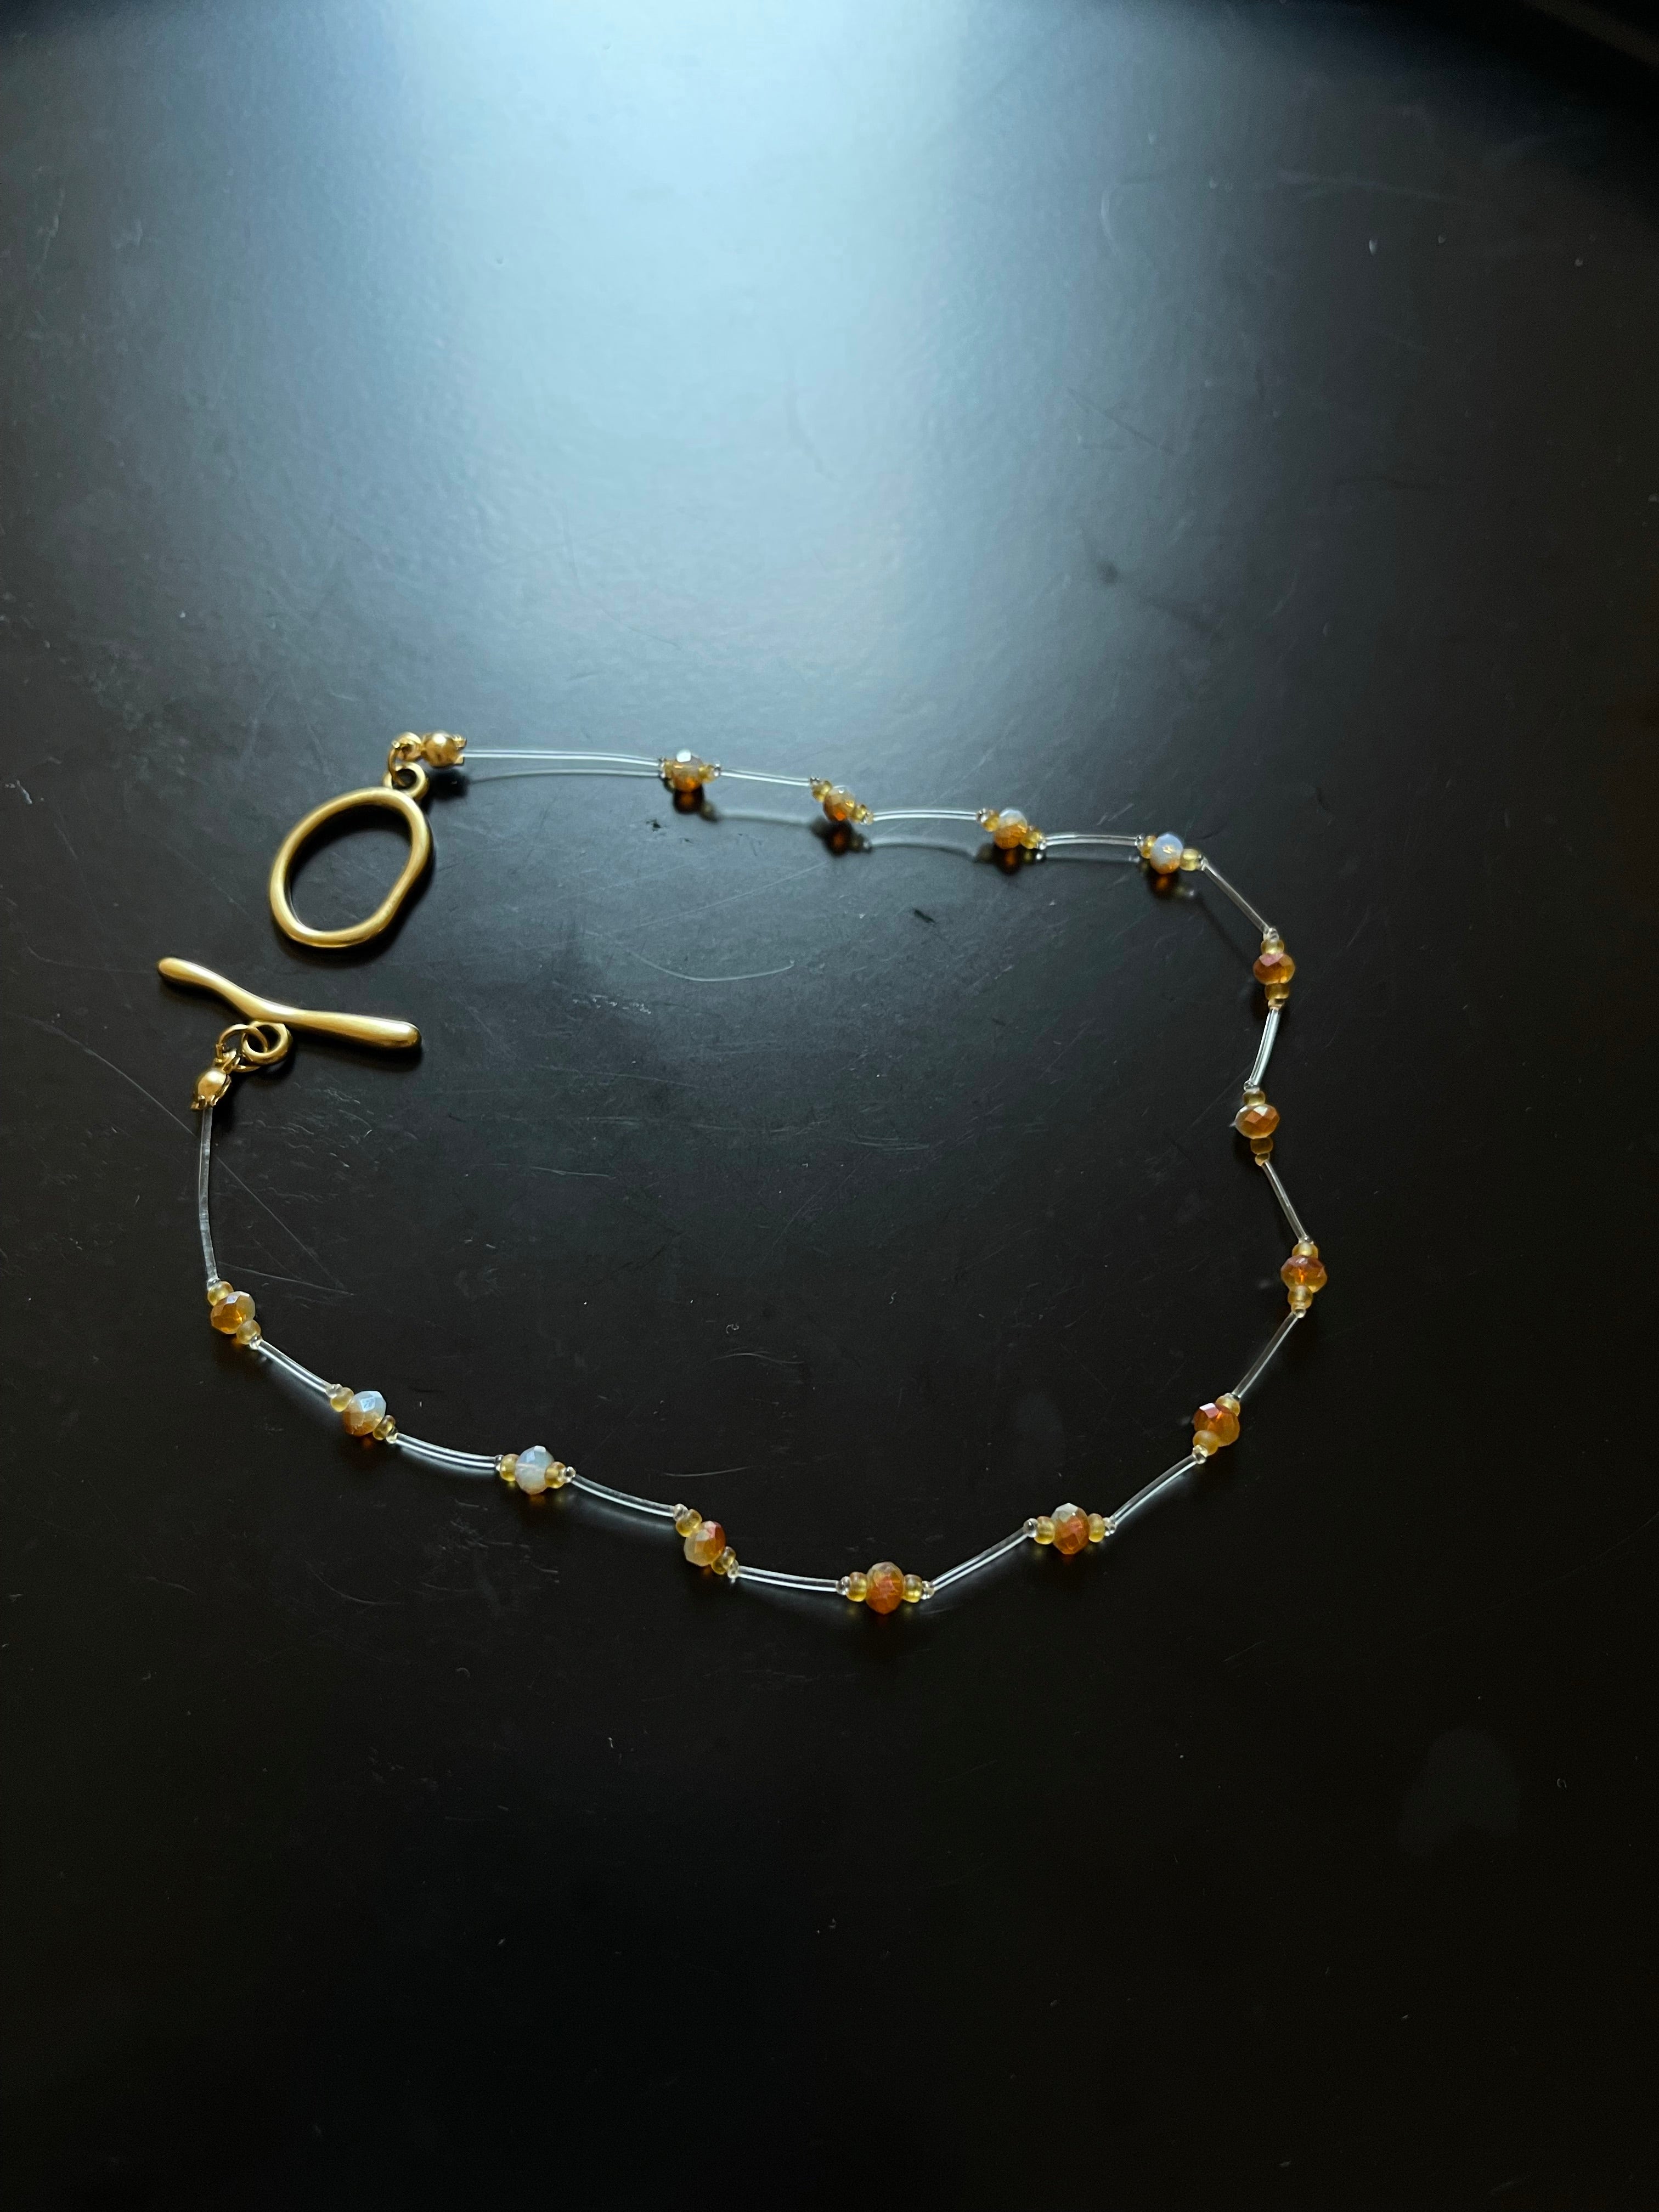 The "Clarissa" Necklace